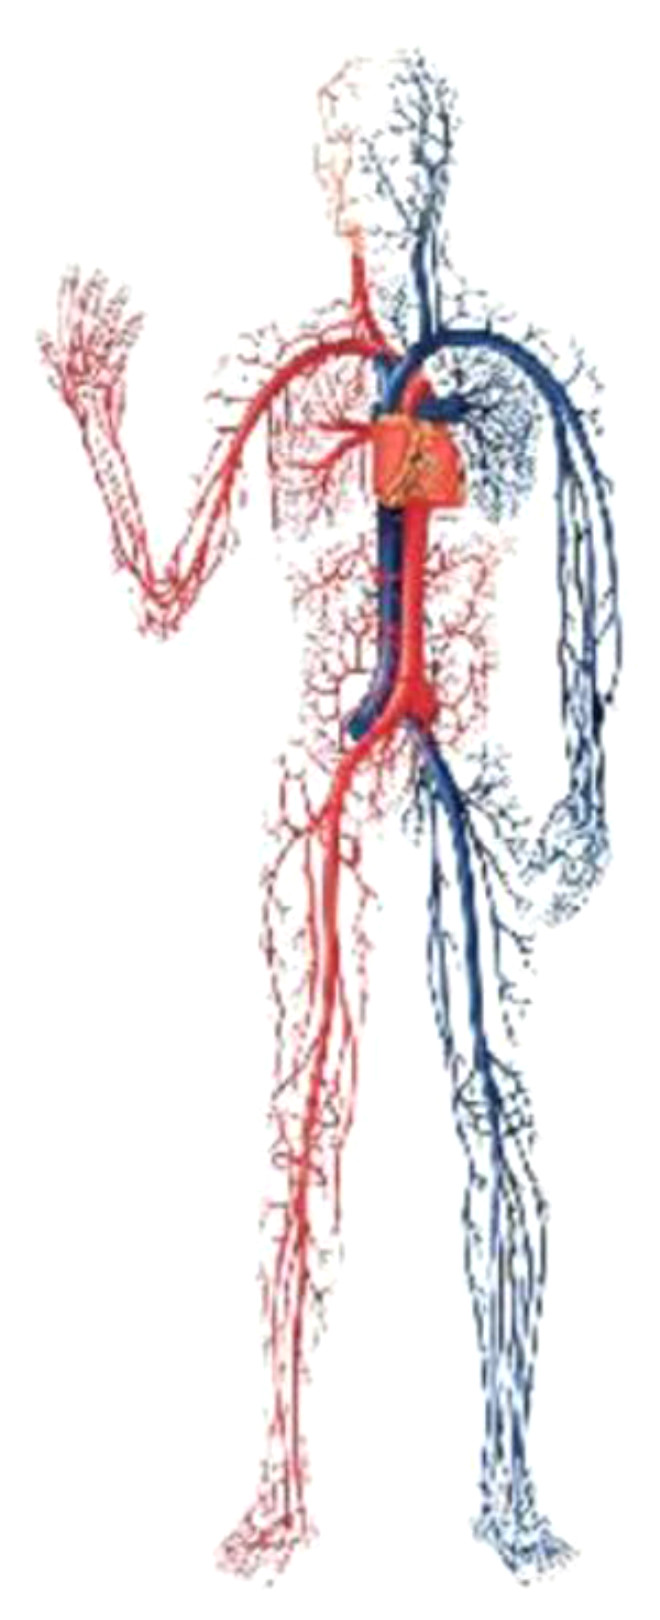 nsan vcudundaki damarlarn uzunluu yaklak 96 bin kilometre.